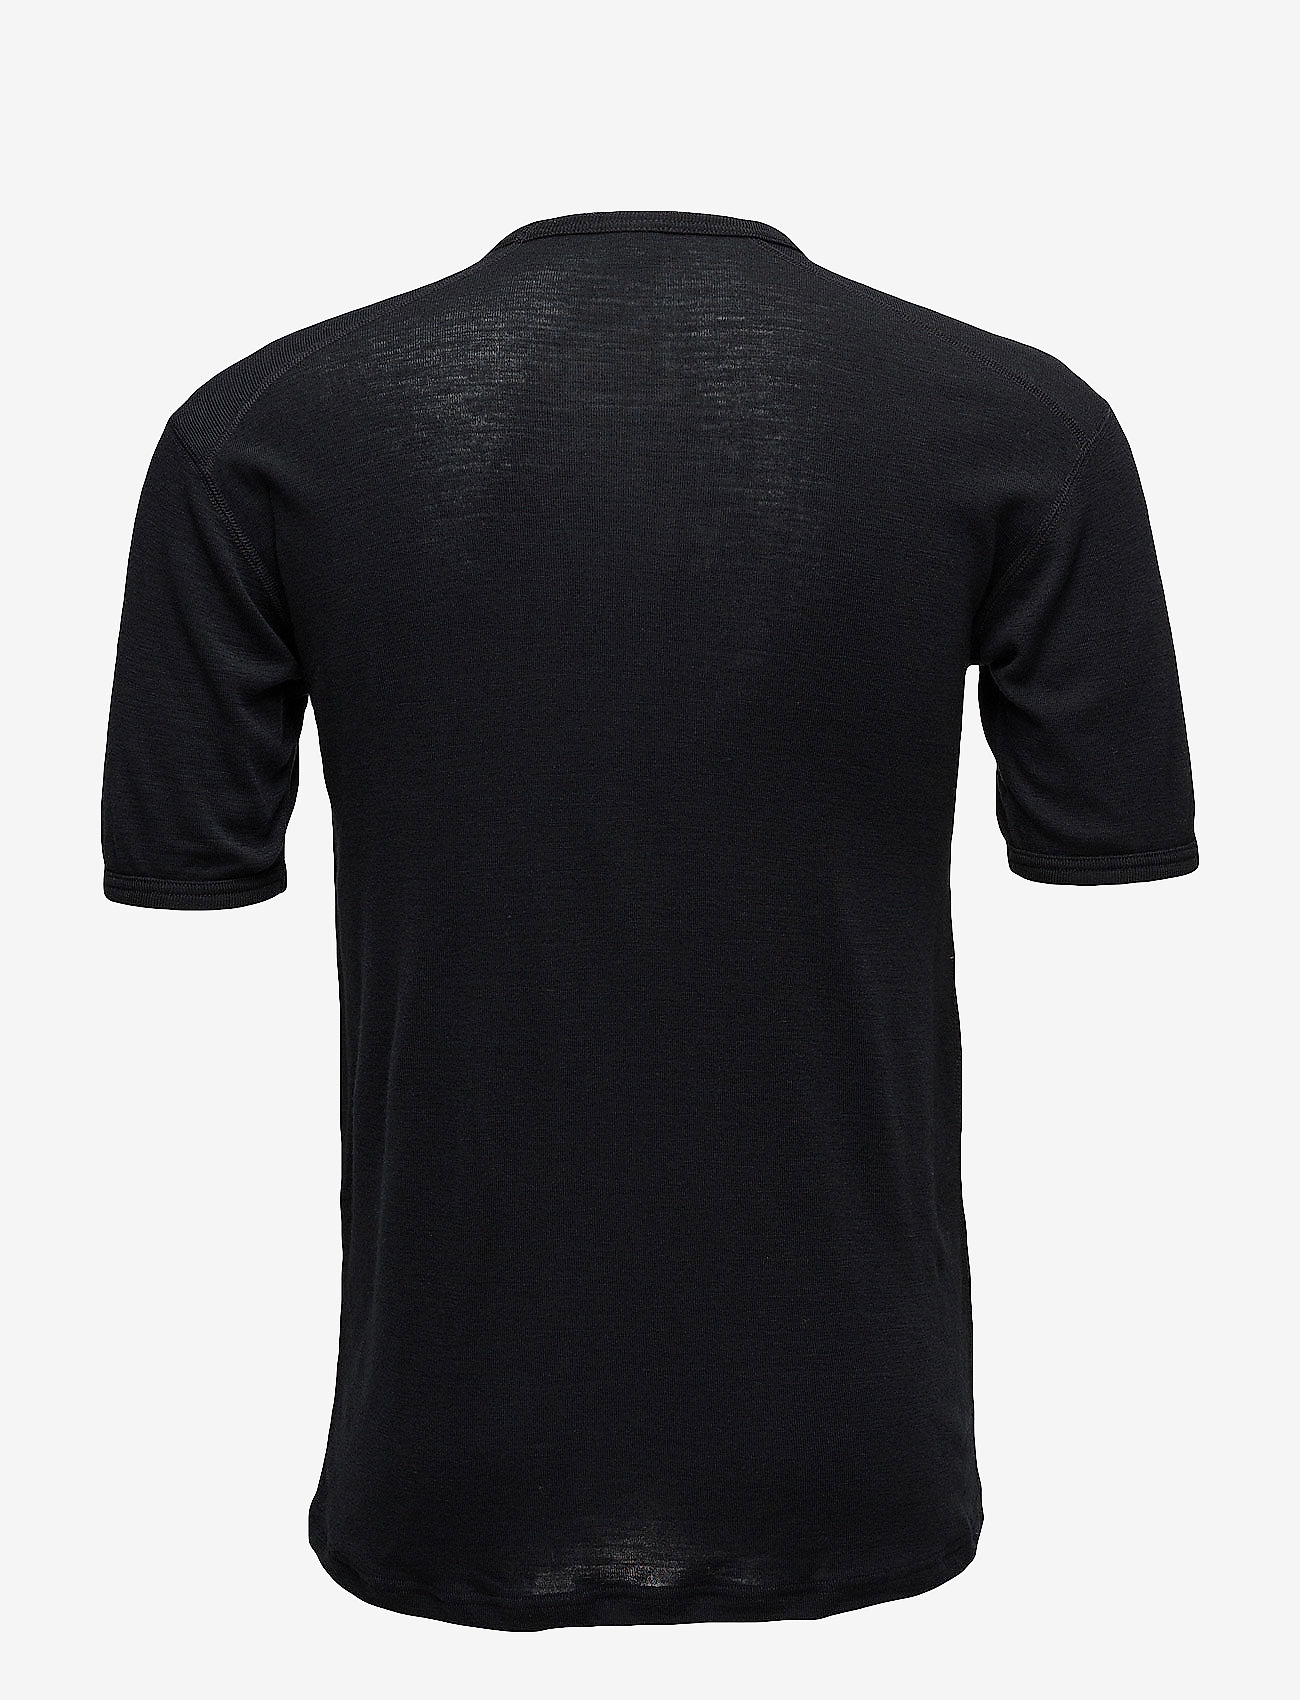 JBS - JBS, t-shirt - laisvalaikio marškinėliai - black - 1